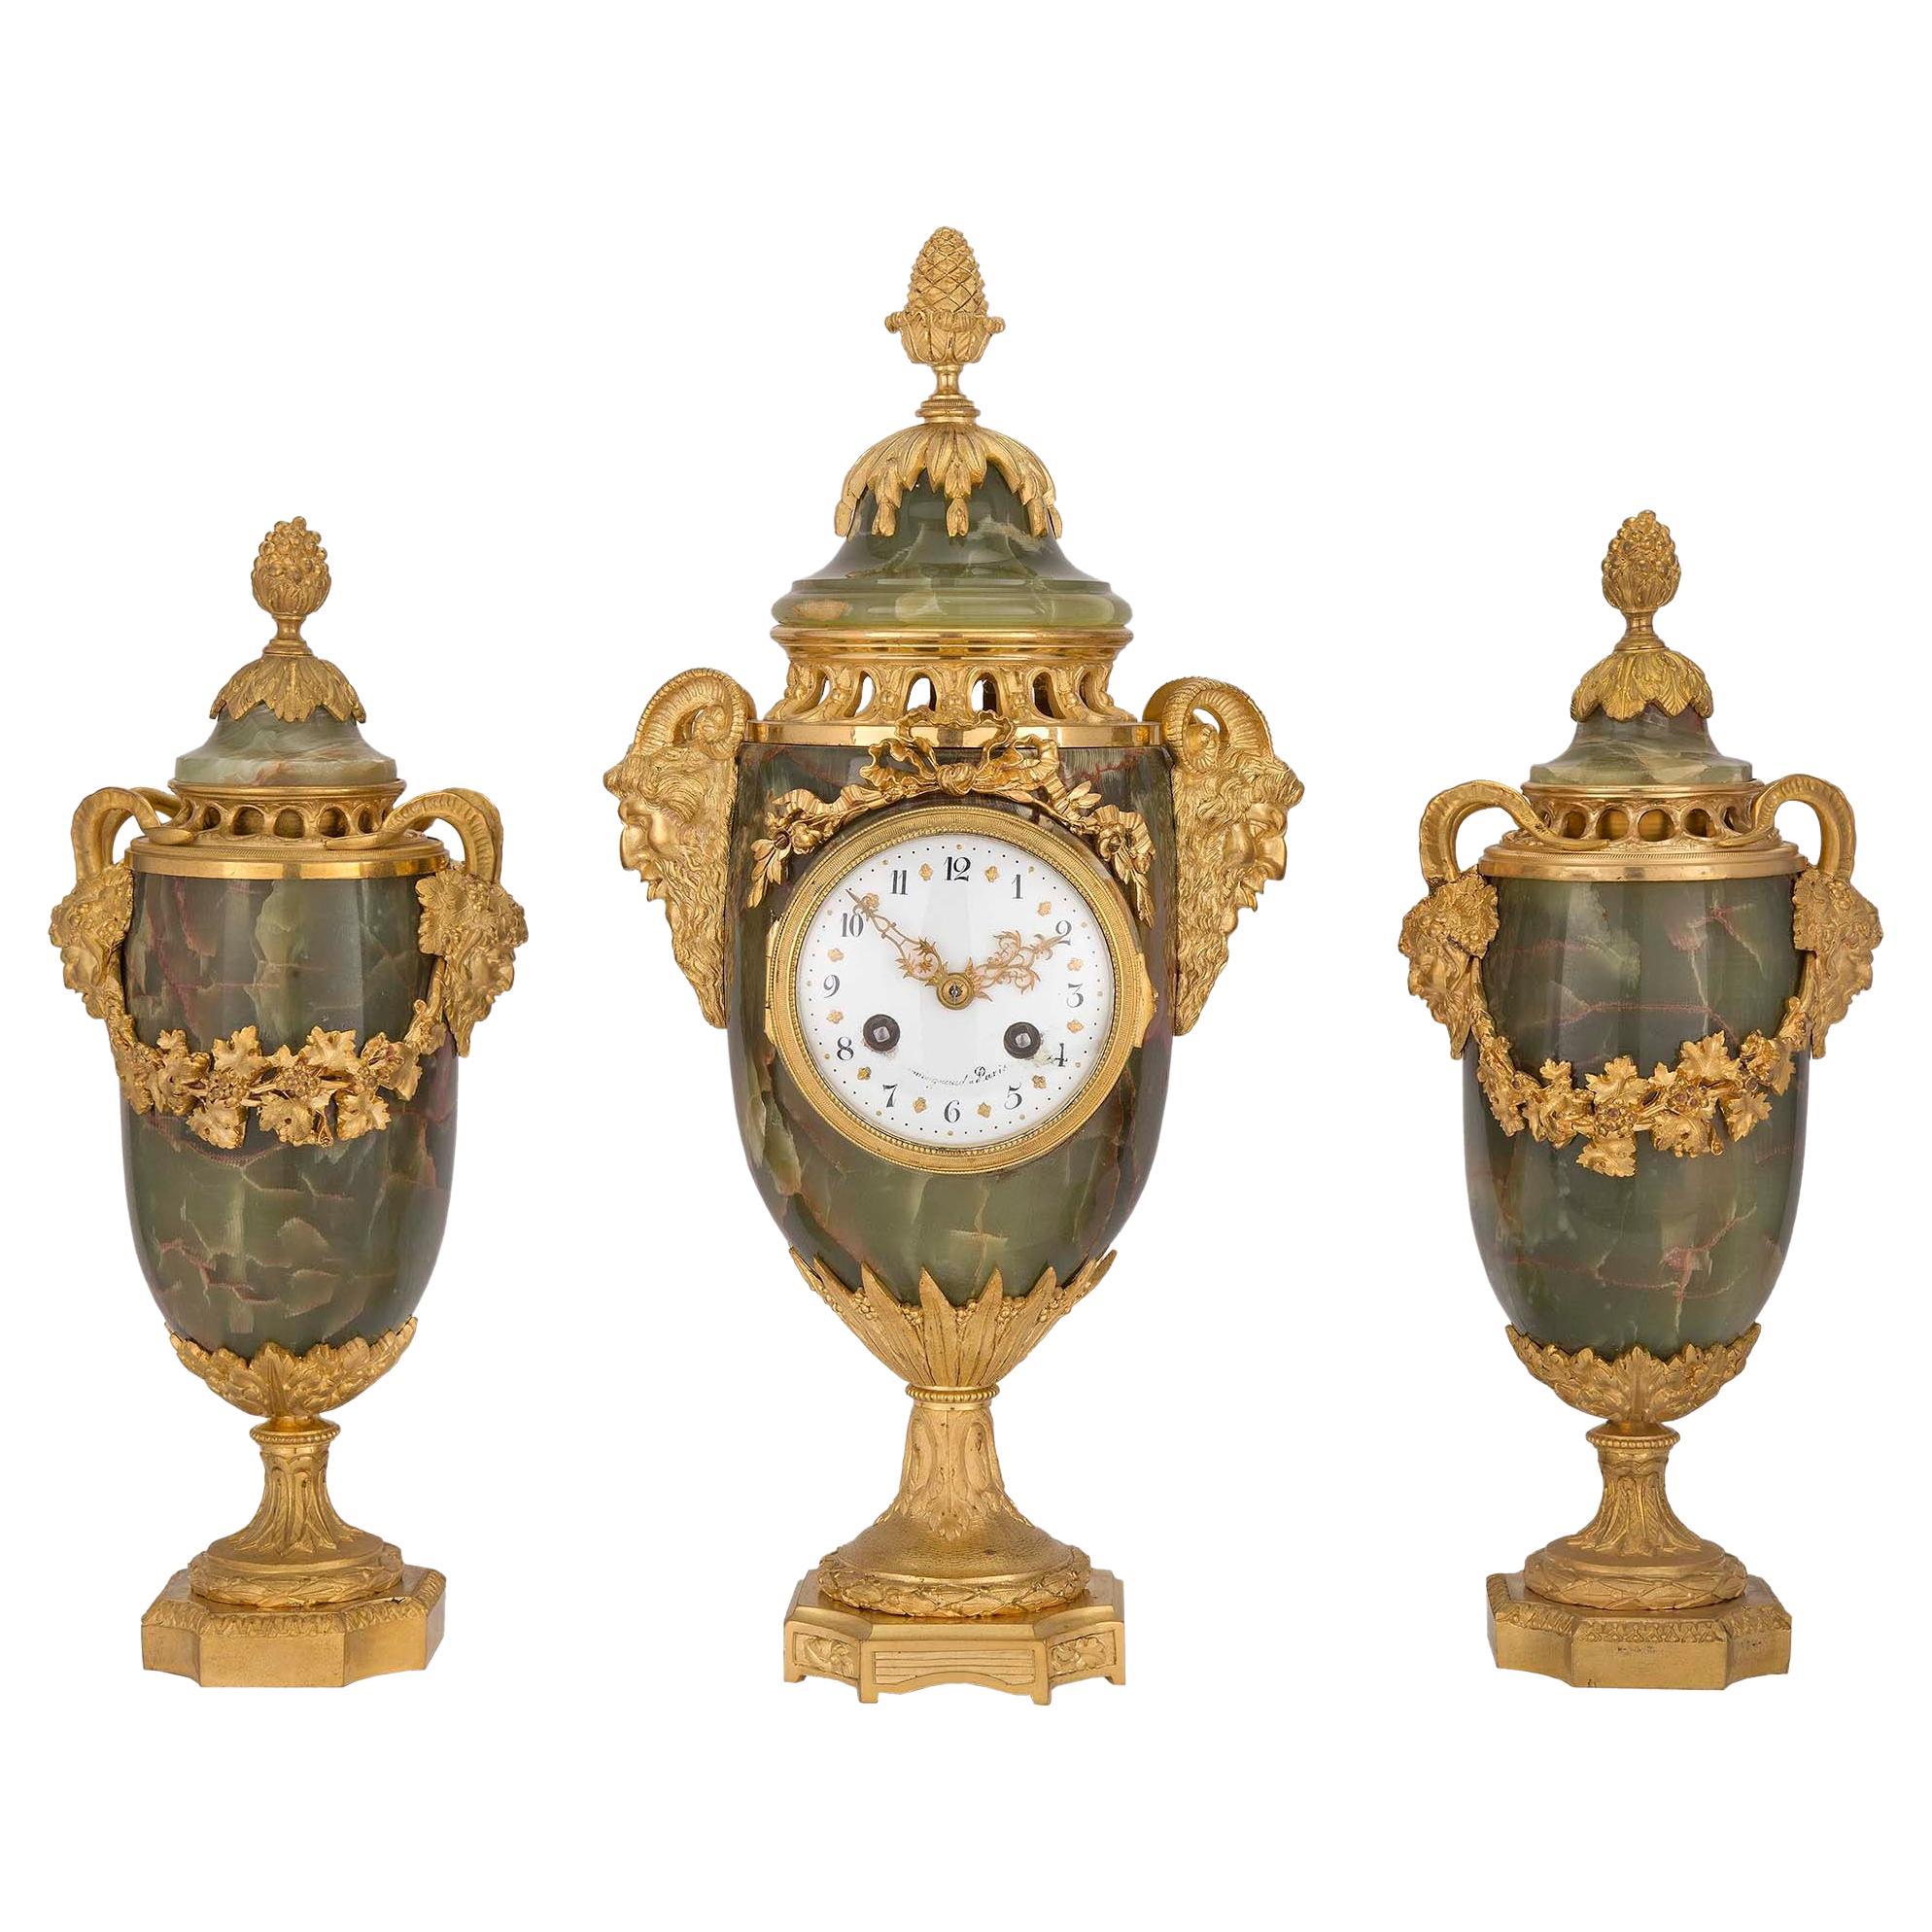 French 19th Century Louis XVI Style Three-Piece Onyx and Ormolu Garniture Set